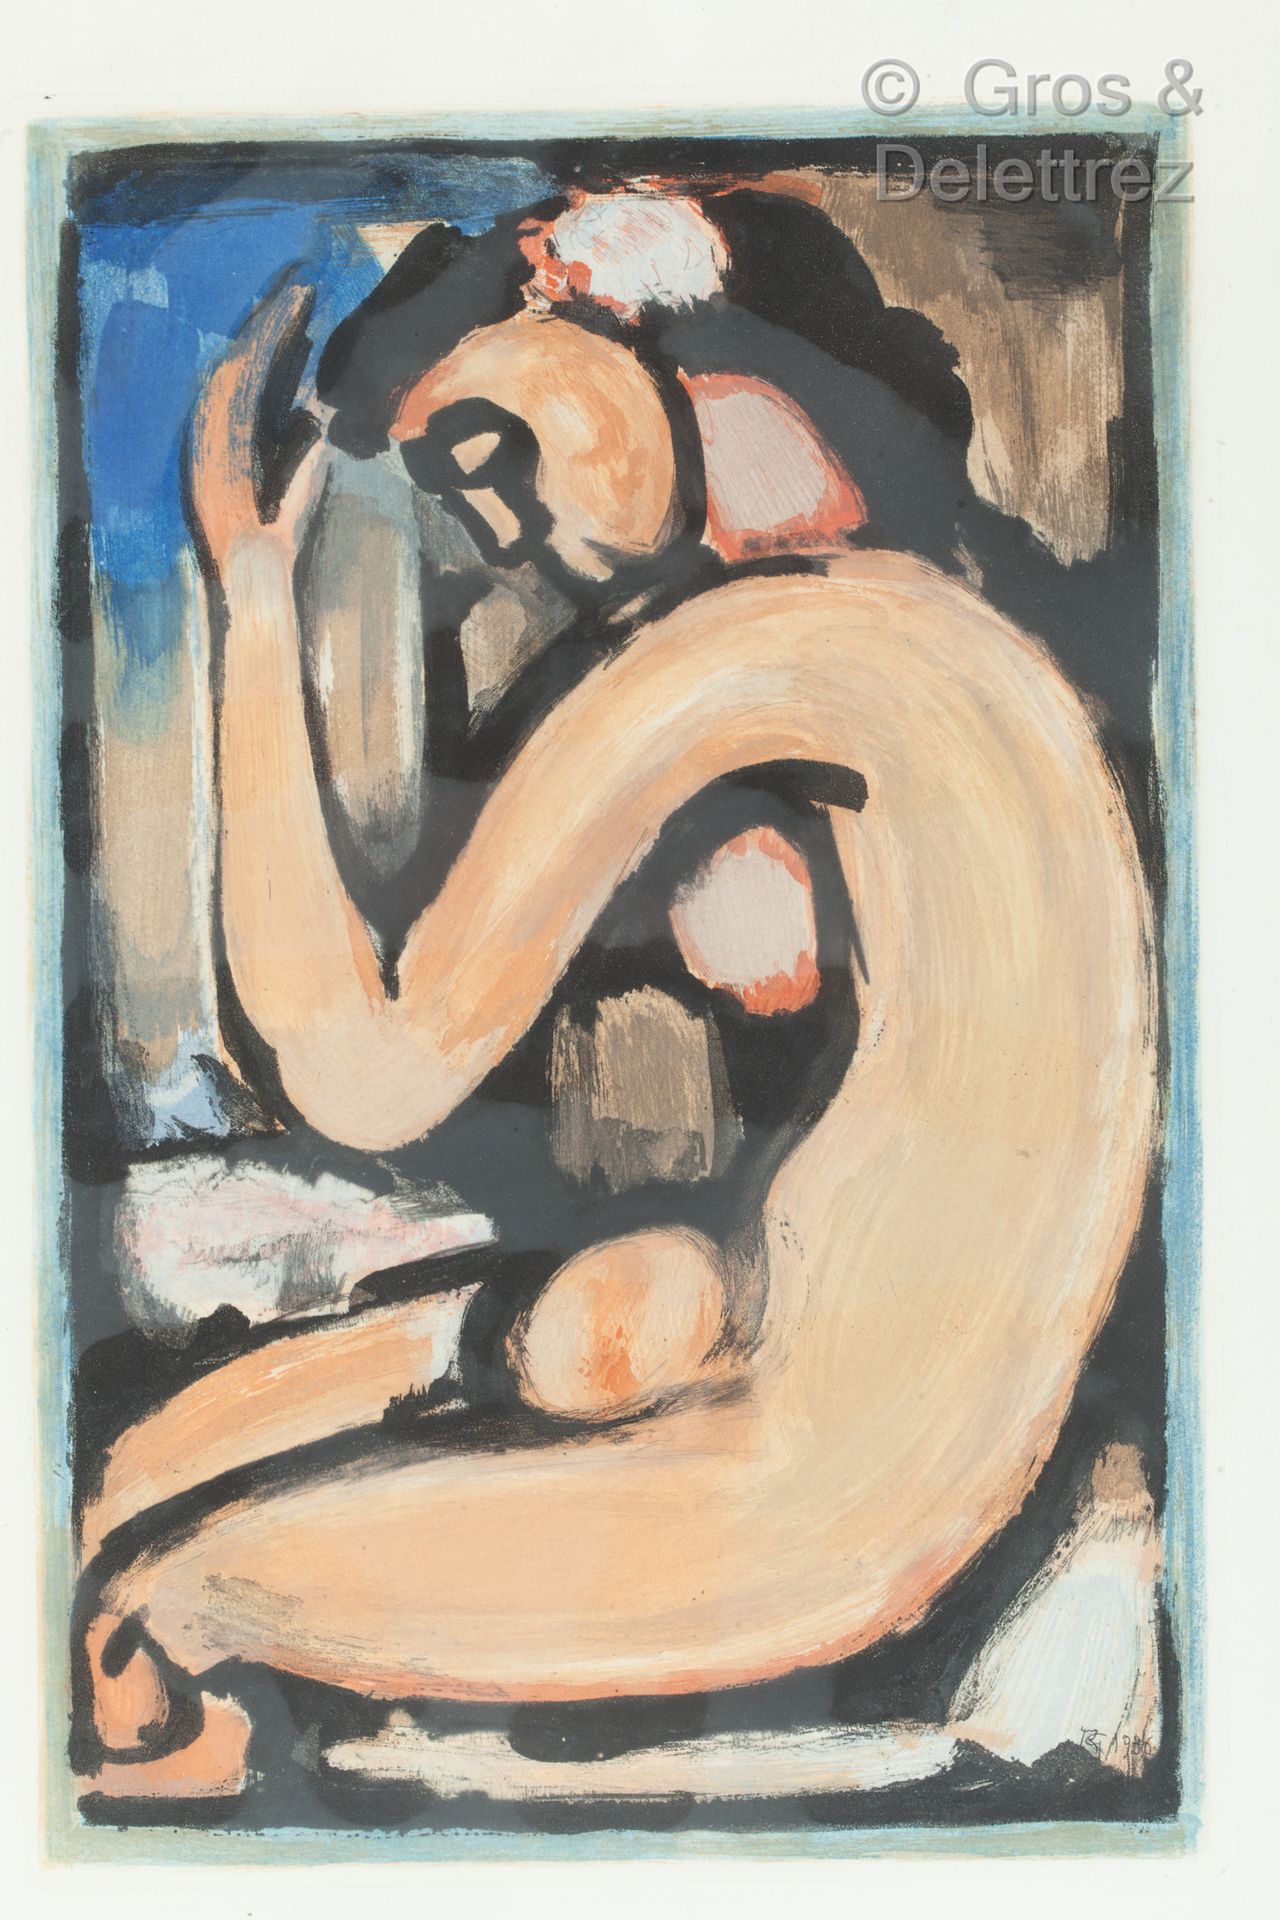 Georges ROUAULT (1871 – 1958) 坐在侧面的裸体。1936年至1938年，《恶之花》系列中的图版。

彩色水印，右下角印有字母和日期。&hellip;